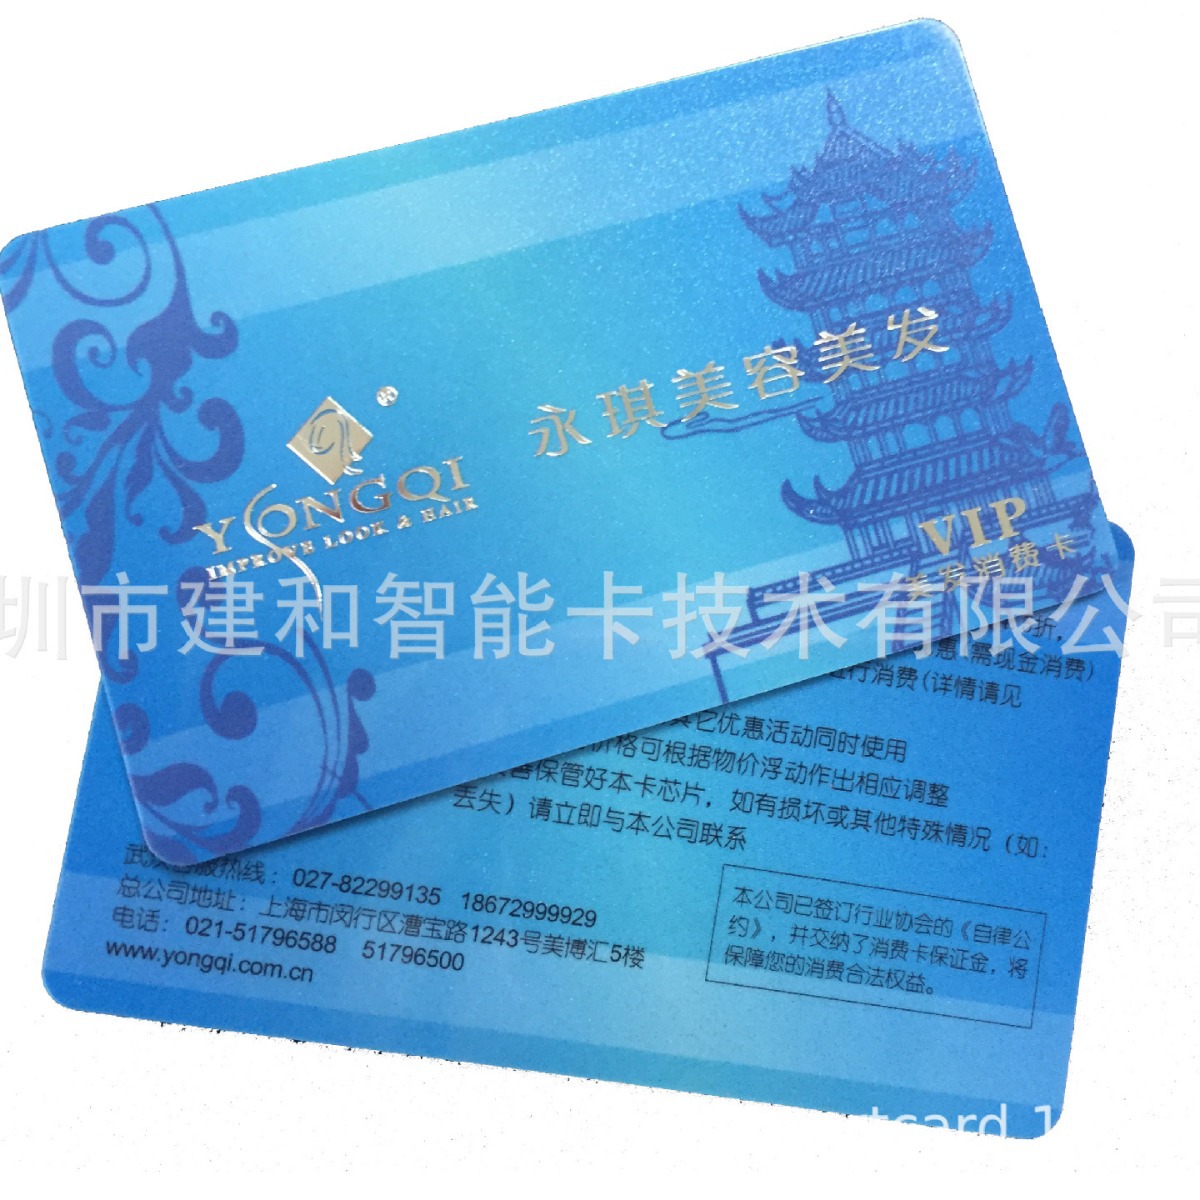 IC人像卡供应  高频F08白卡生产厂家  深圳制卡厂 感应IC芯片卡